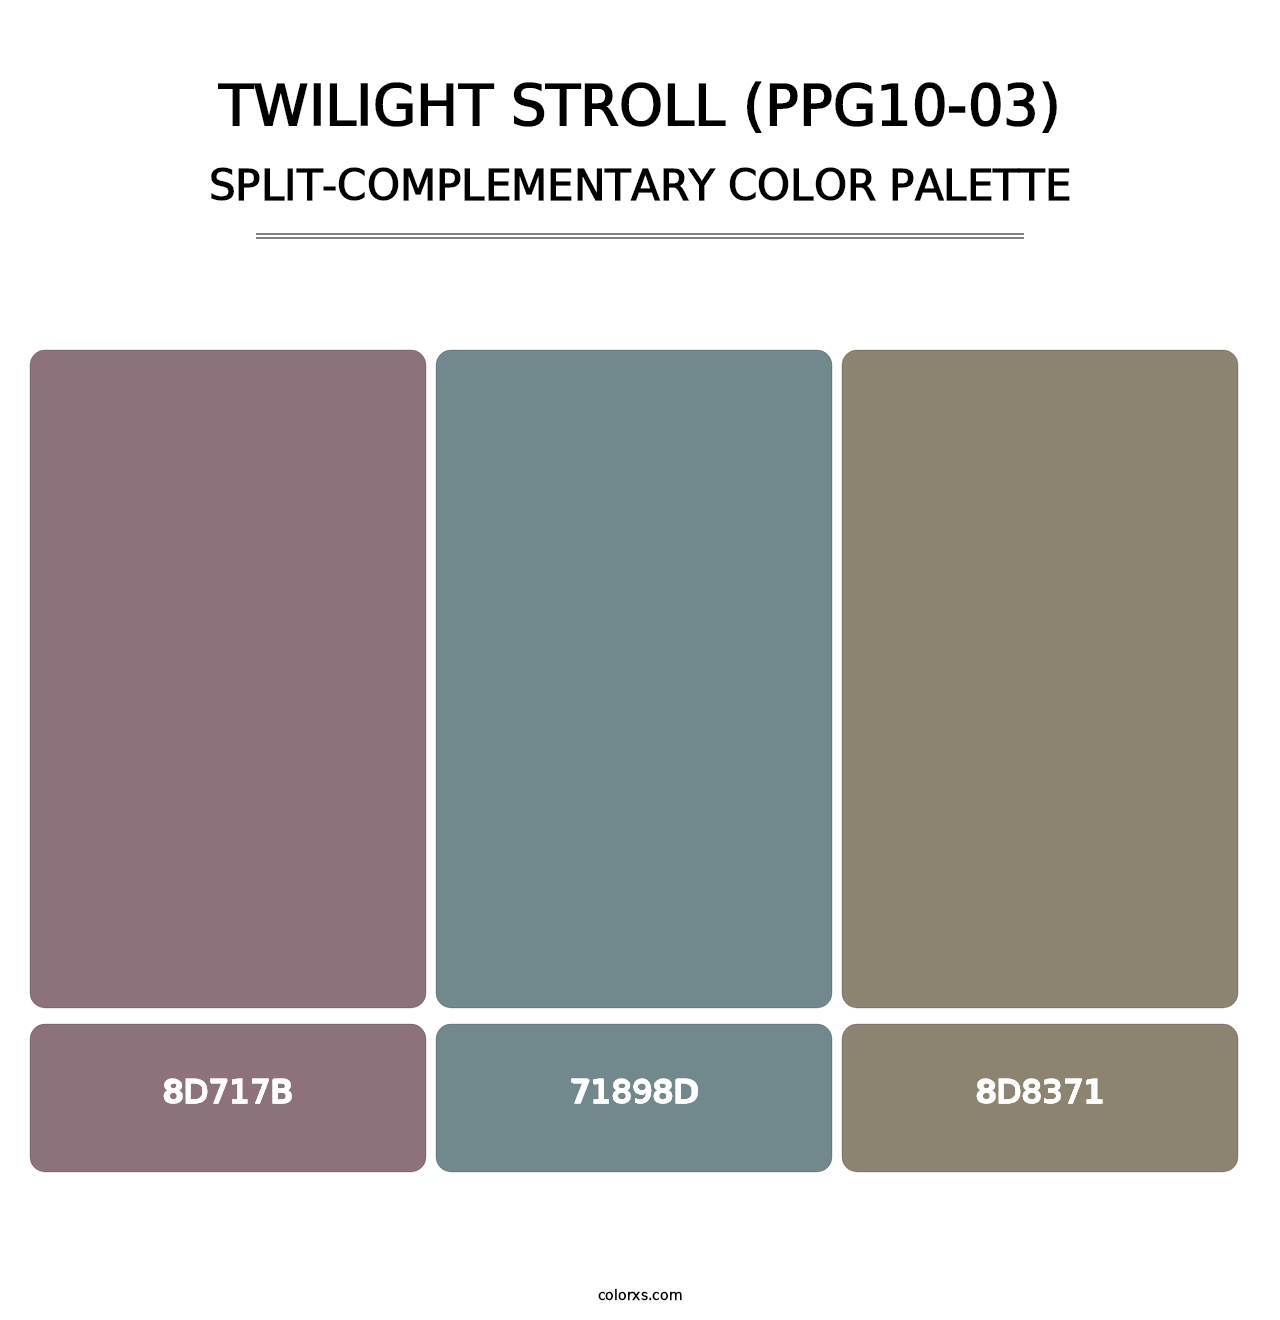 Twilight Stroll (PPG10-03) - Split-Complementary Color Palette